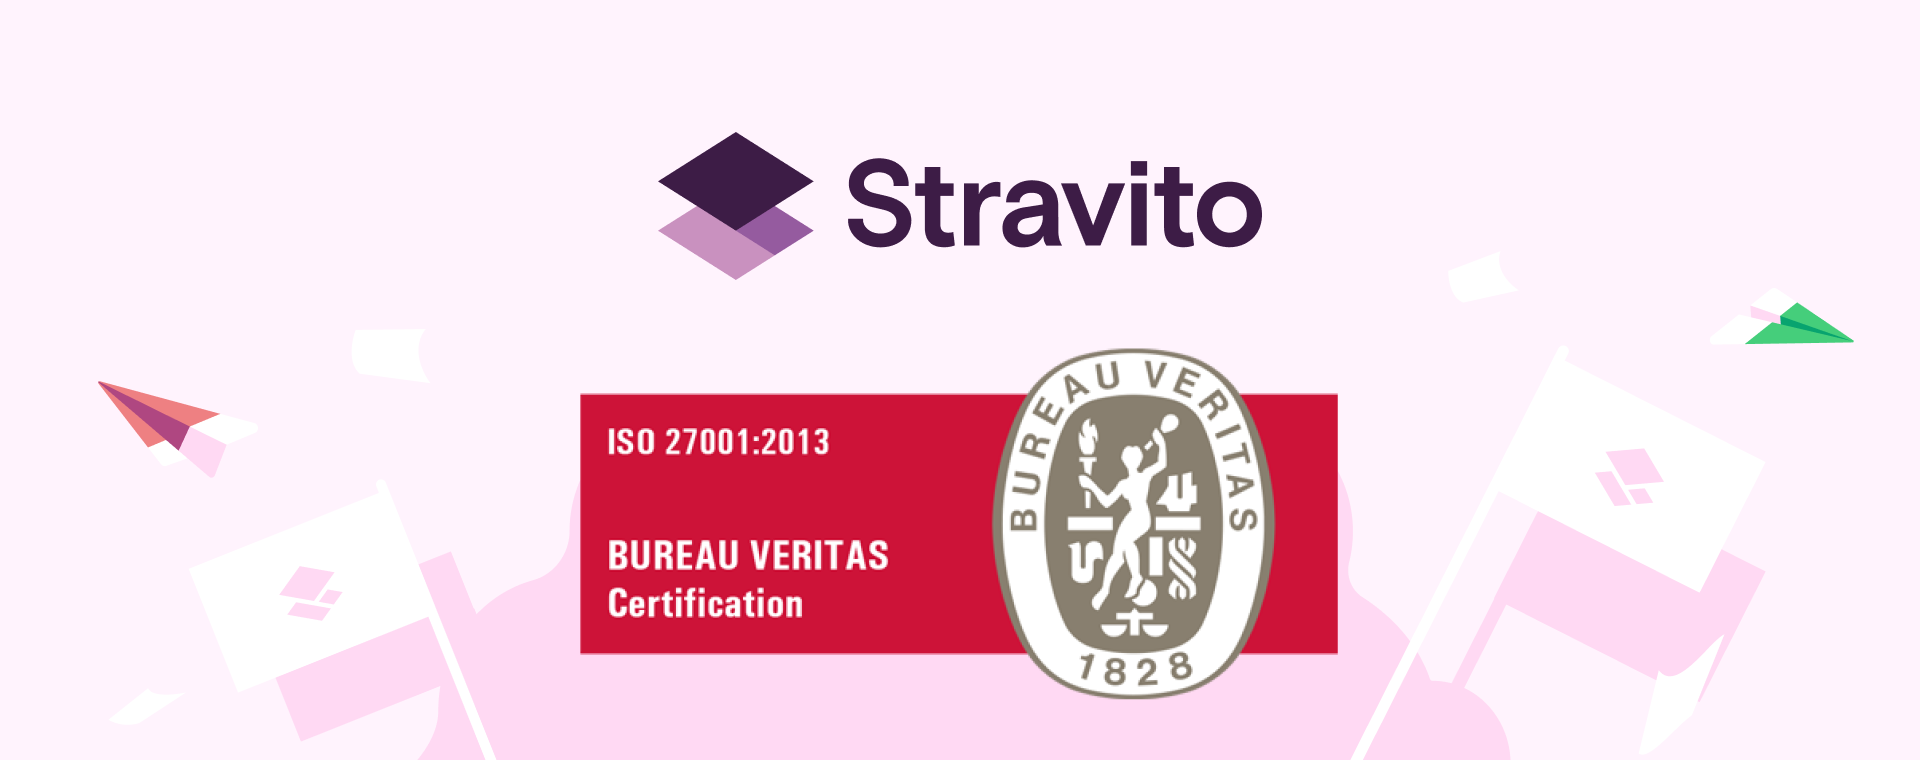 Stravito ISO 27001 badge